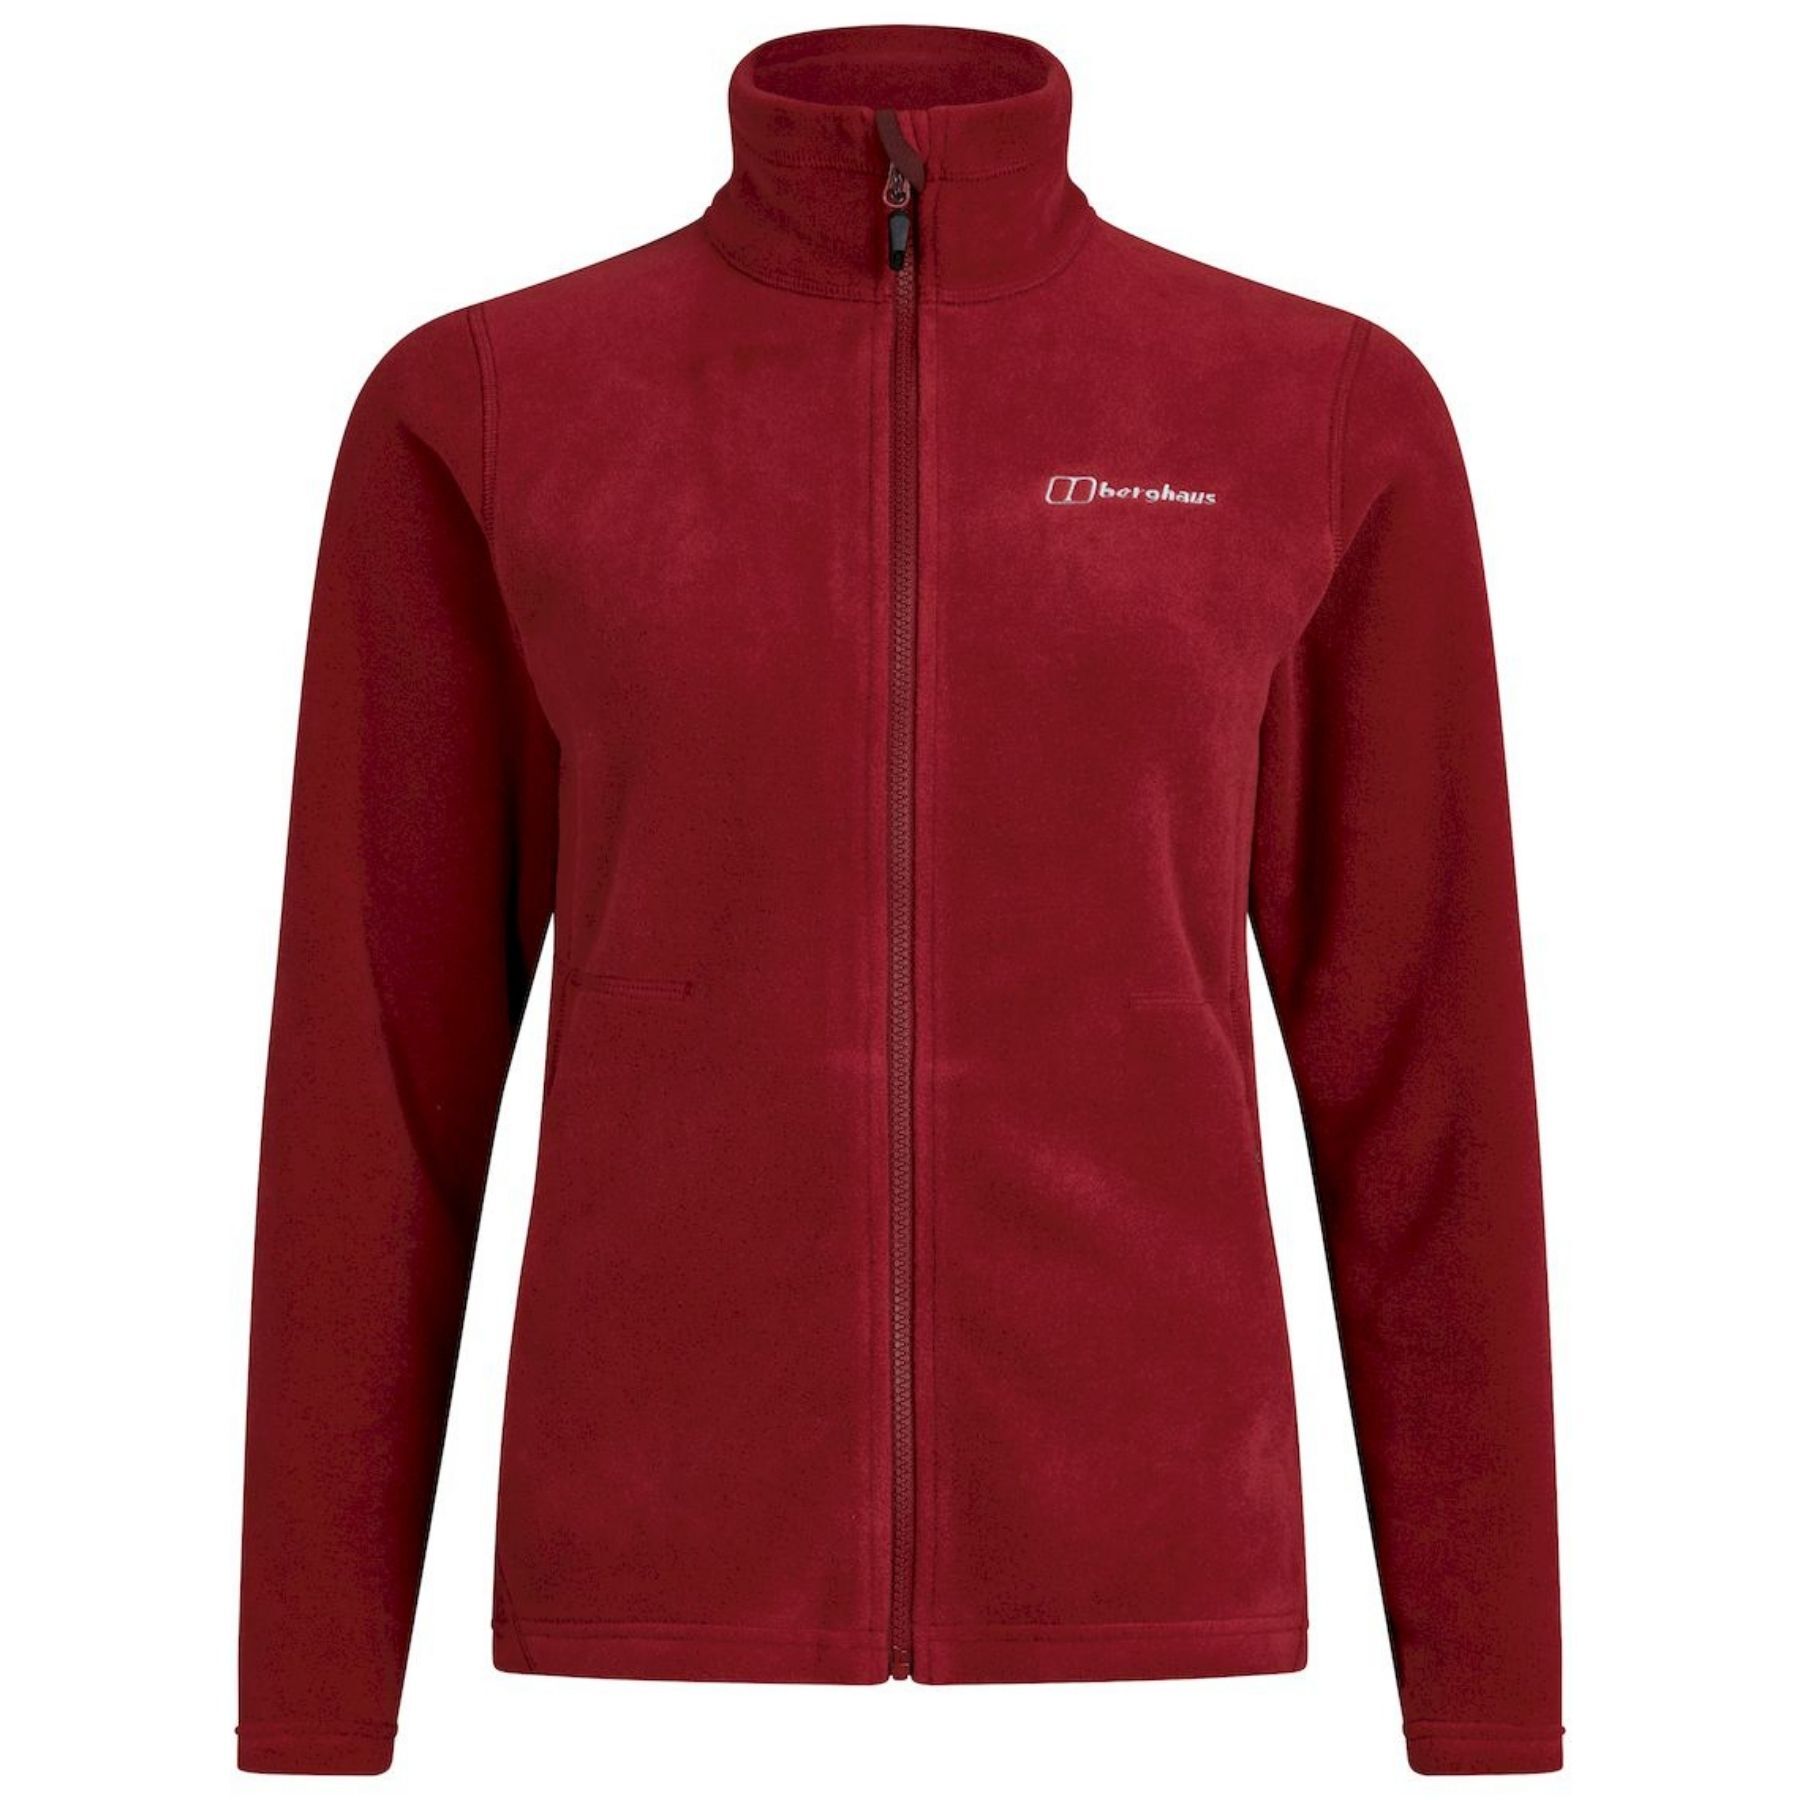 Berghaus Prism Pt Ia Fl Jacket - Fleece jacket - Women's